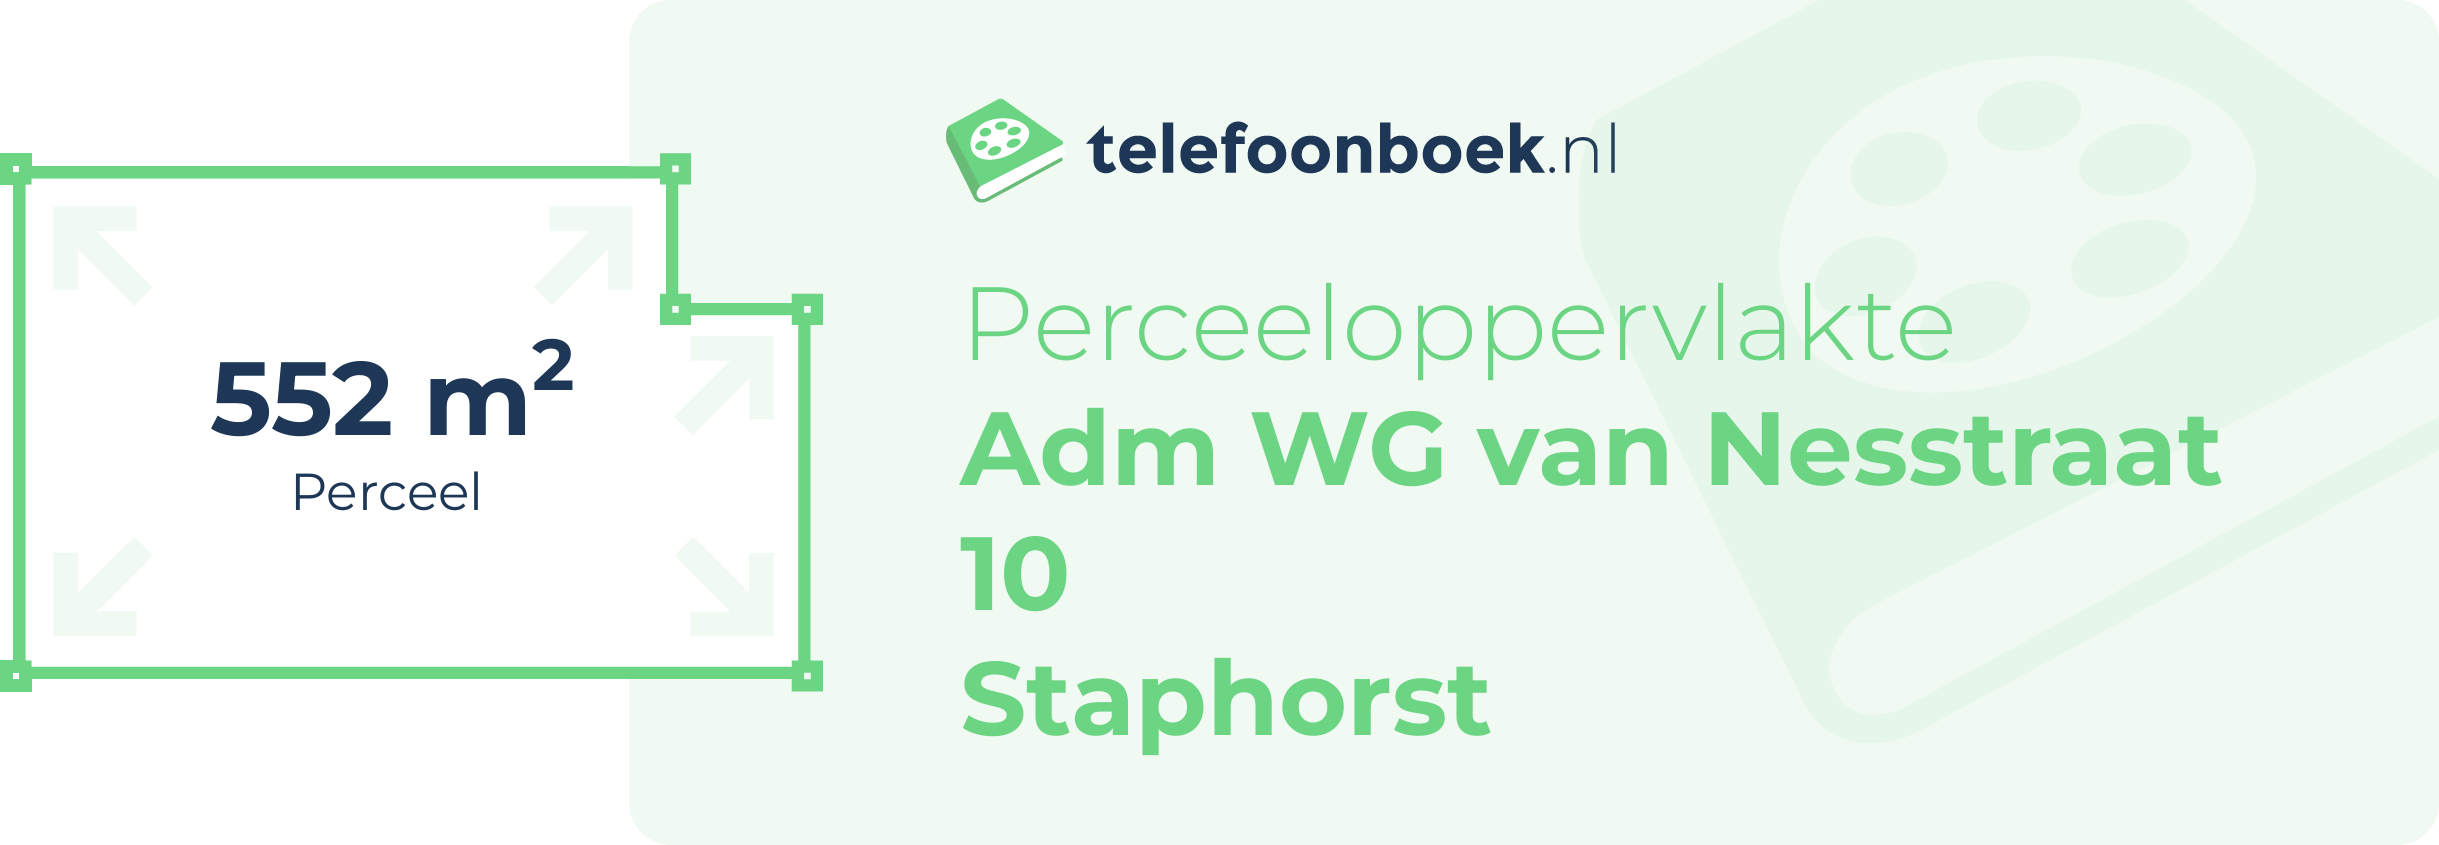 Perceeloppervlakte Adm WG Van Nesstraat 10 Staphorst